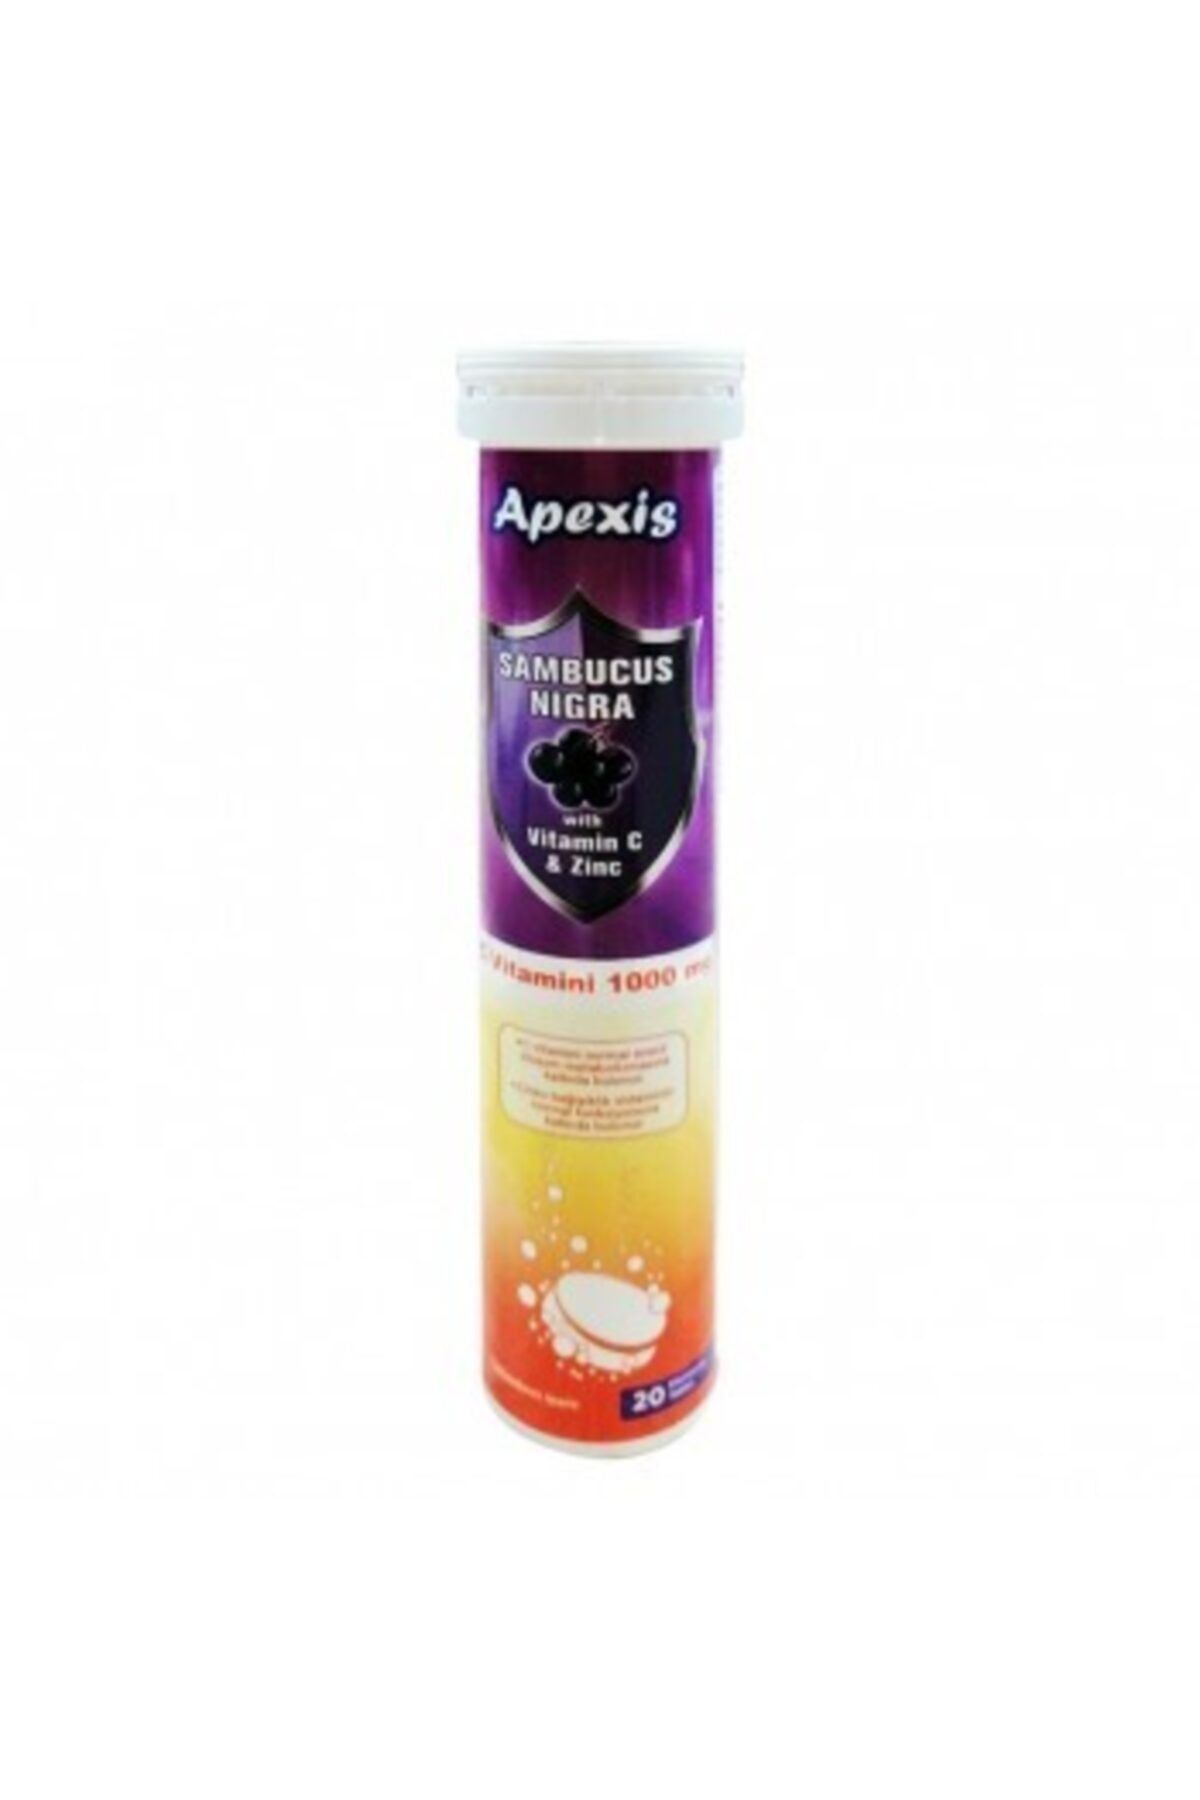 Apexis Sambucus Nigra Vitamin C & Zinc (çinko) 1000 Mg 20 Tb